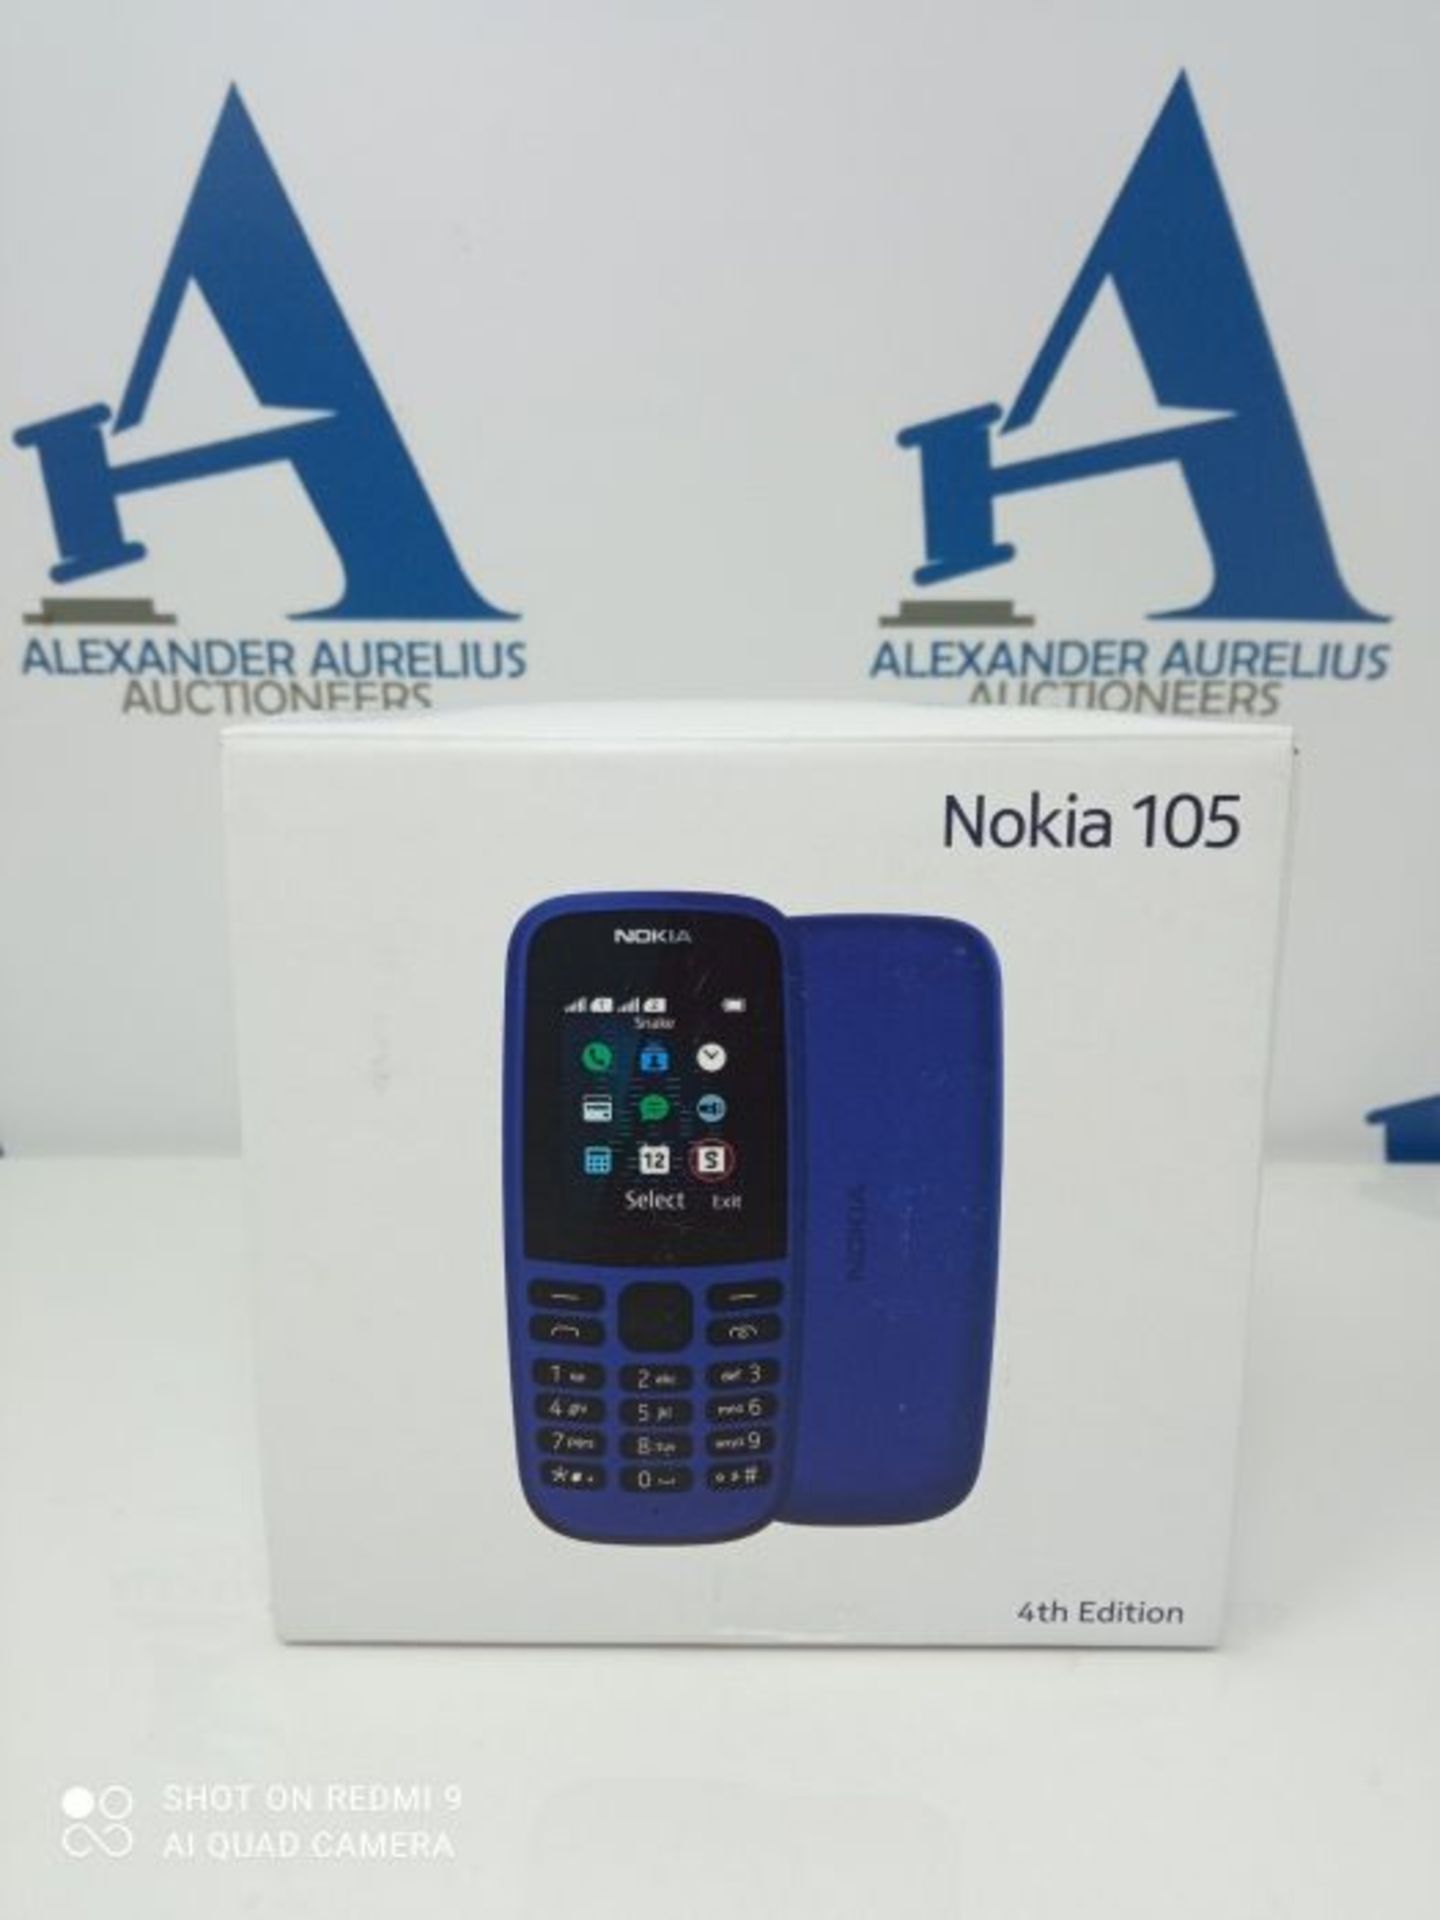 Nokia 105 Mobiltelefon (1, 8 Zoll Farbdisplay, FM Radio, 4 MB ROM, Dual-Sim) Schwarz,